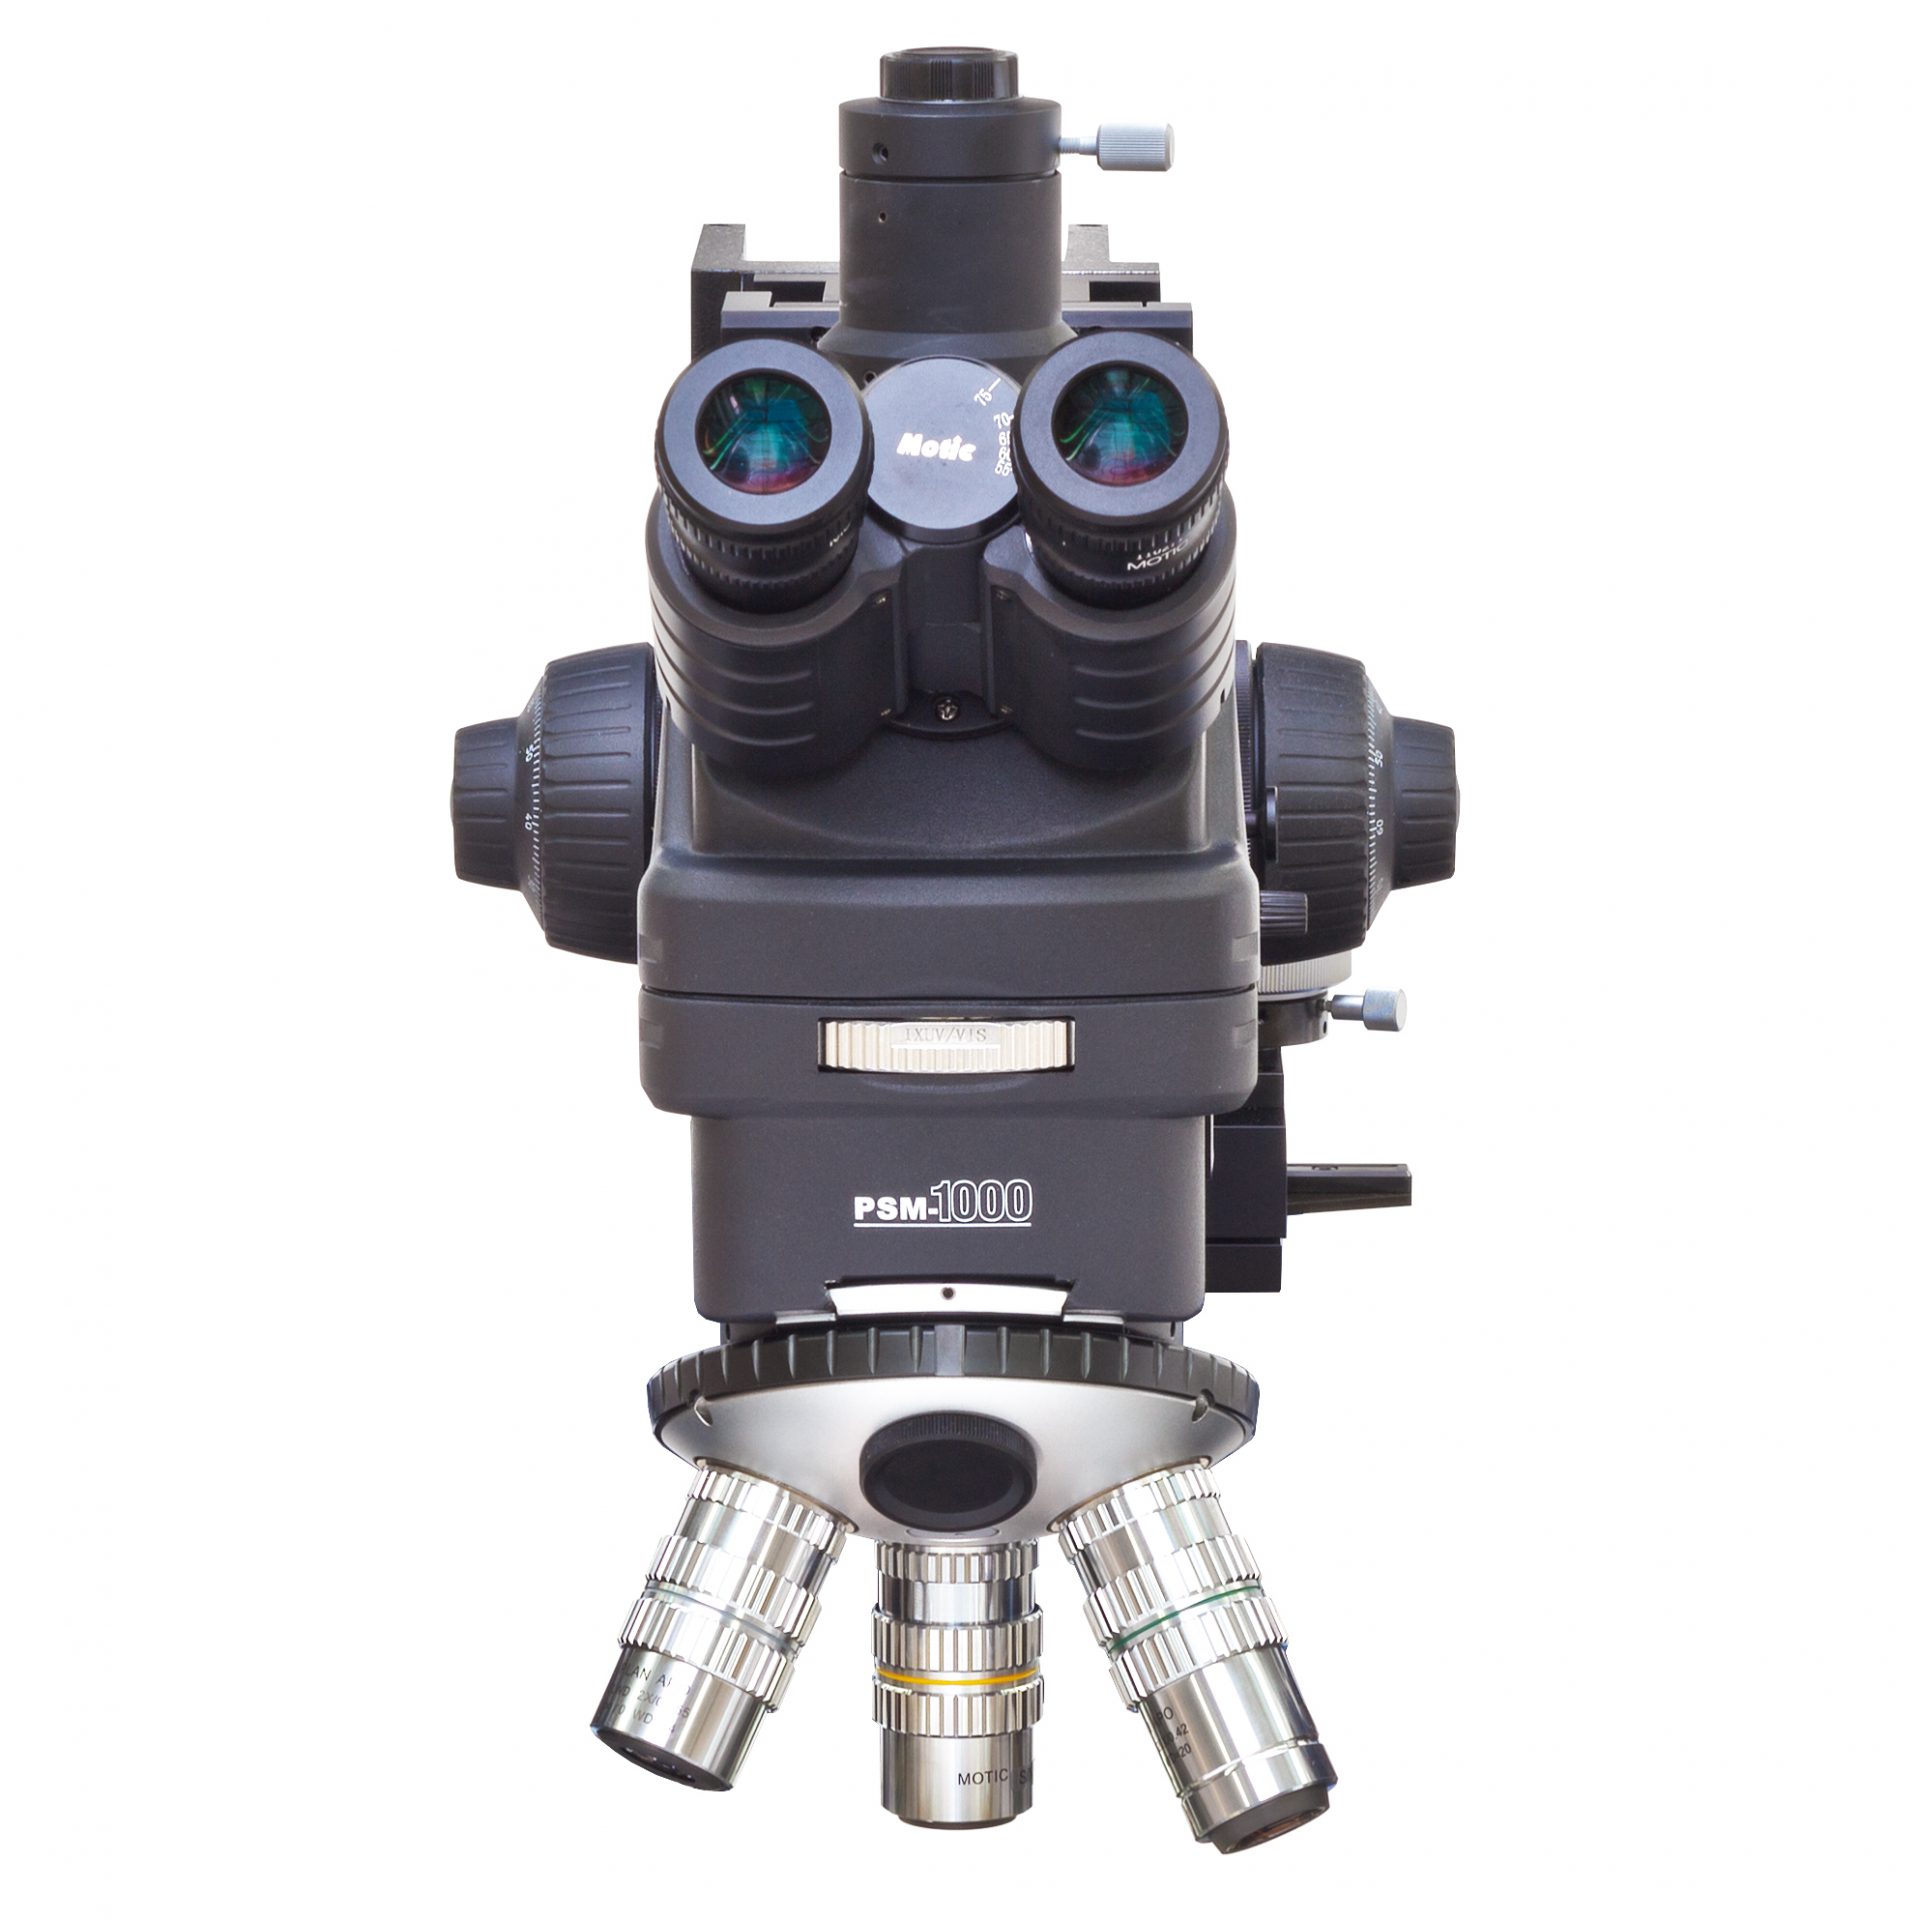 EPS150FA - High quality optics